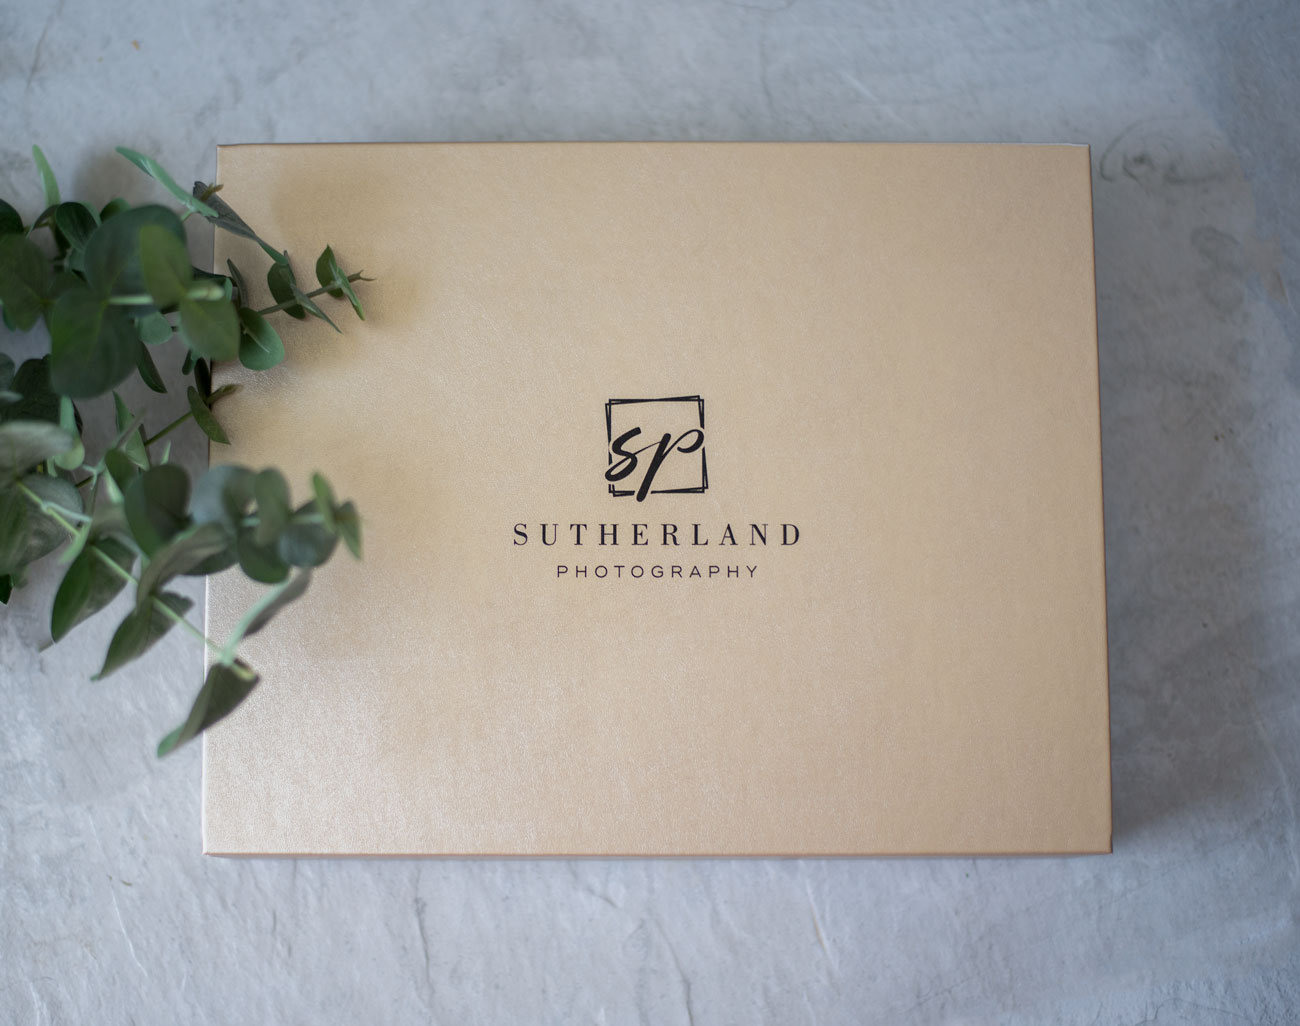 Sutherland Photography folio box